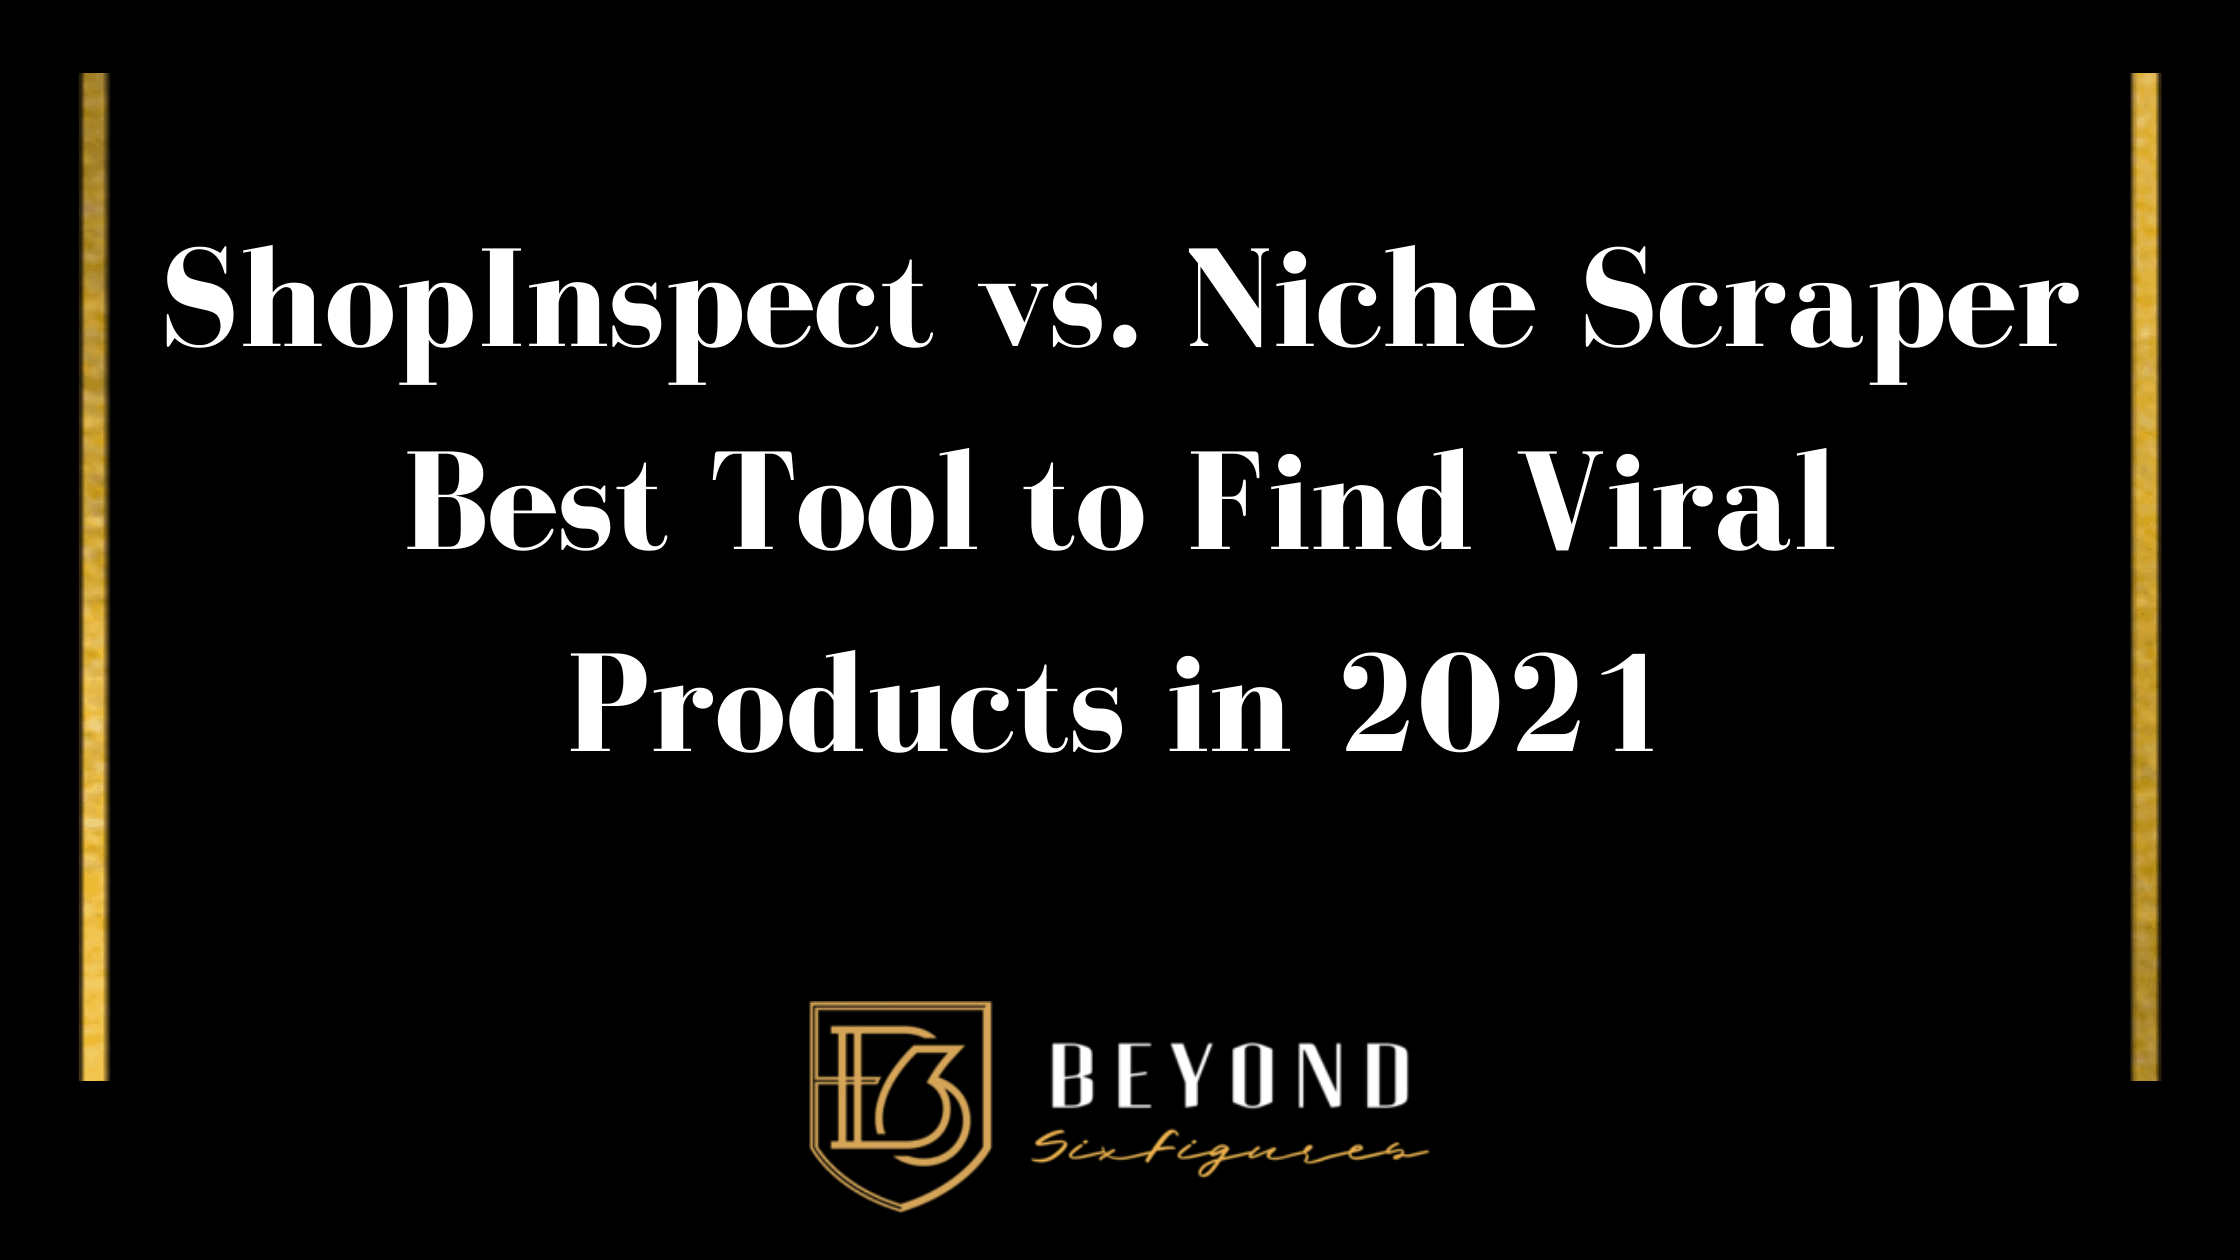 BeyondSixFigures "ShopInspect vs. Niche Scraper - Best Tool to Find Viral Products in 2021" Blog Post Banner